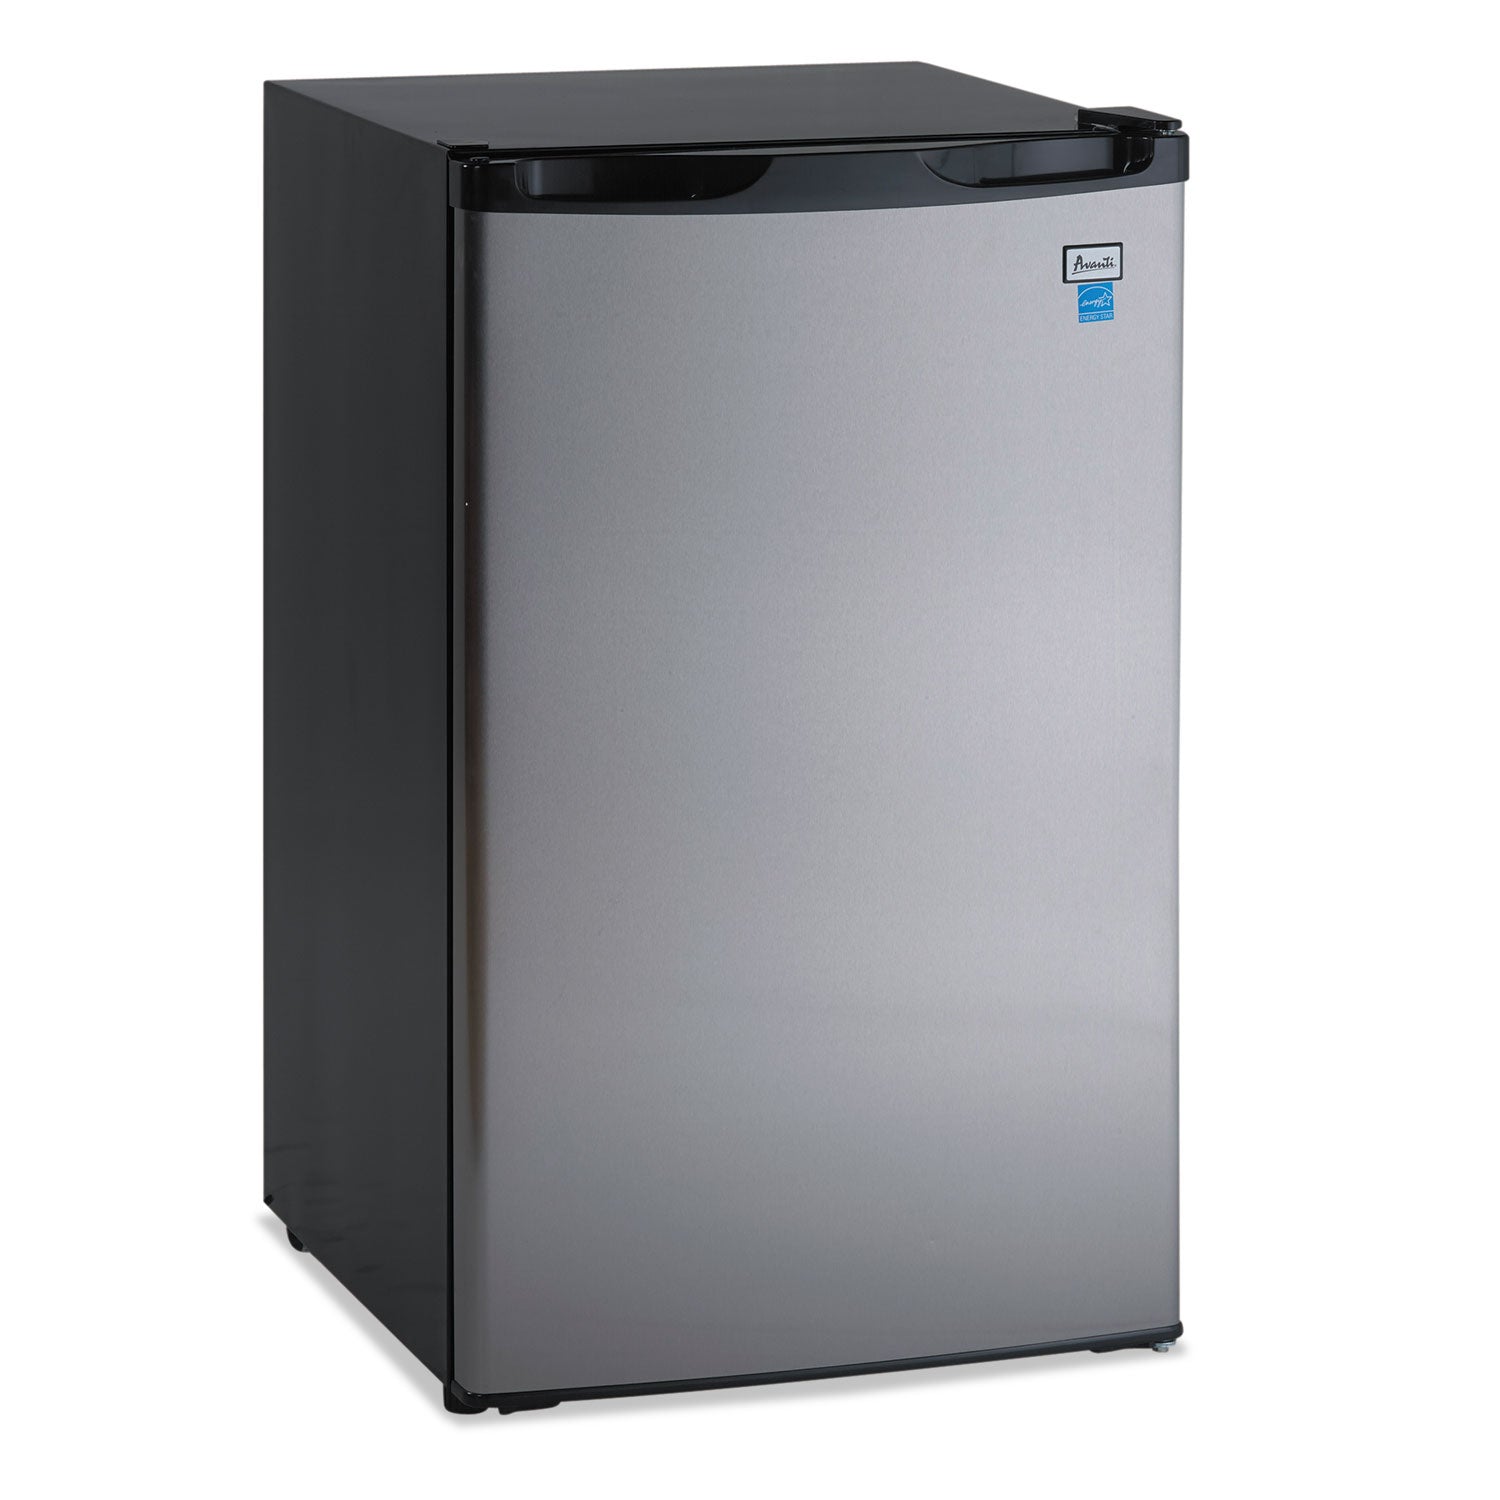 4.4 CF Refrigerator, 19 1/2"W x 22"D x 33"H, Black/Stainless Steel - 